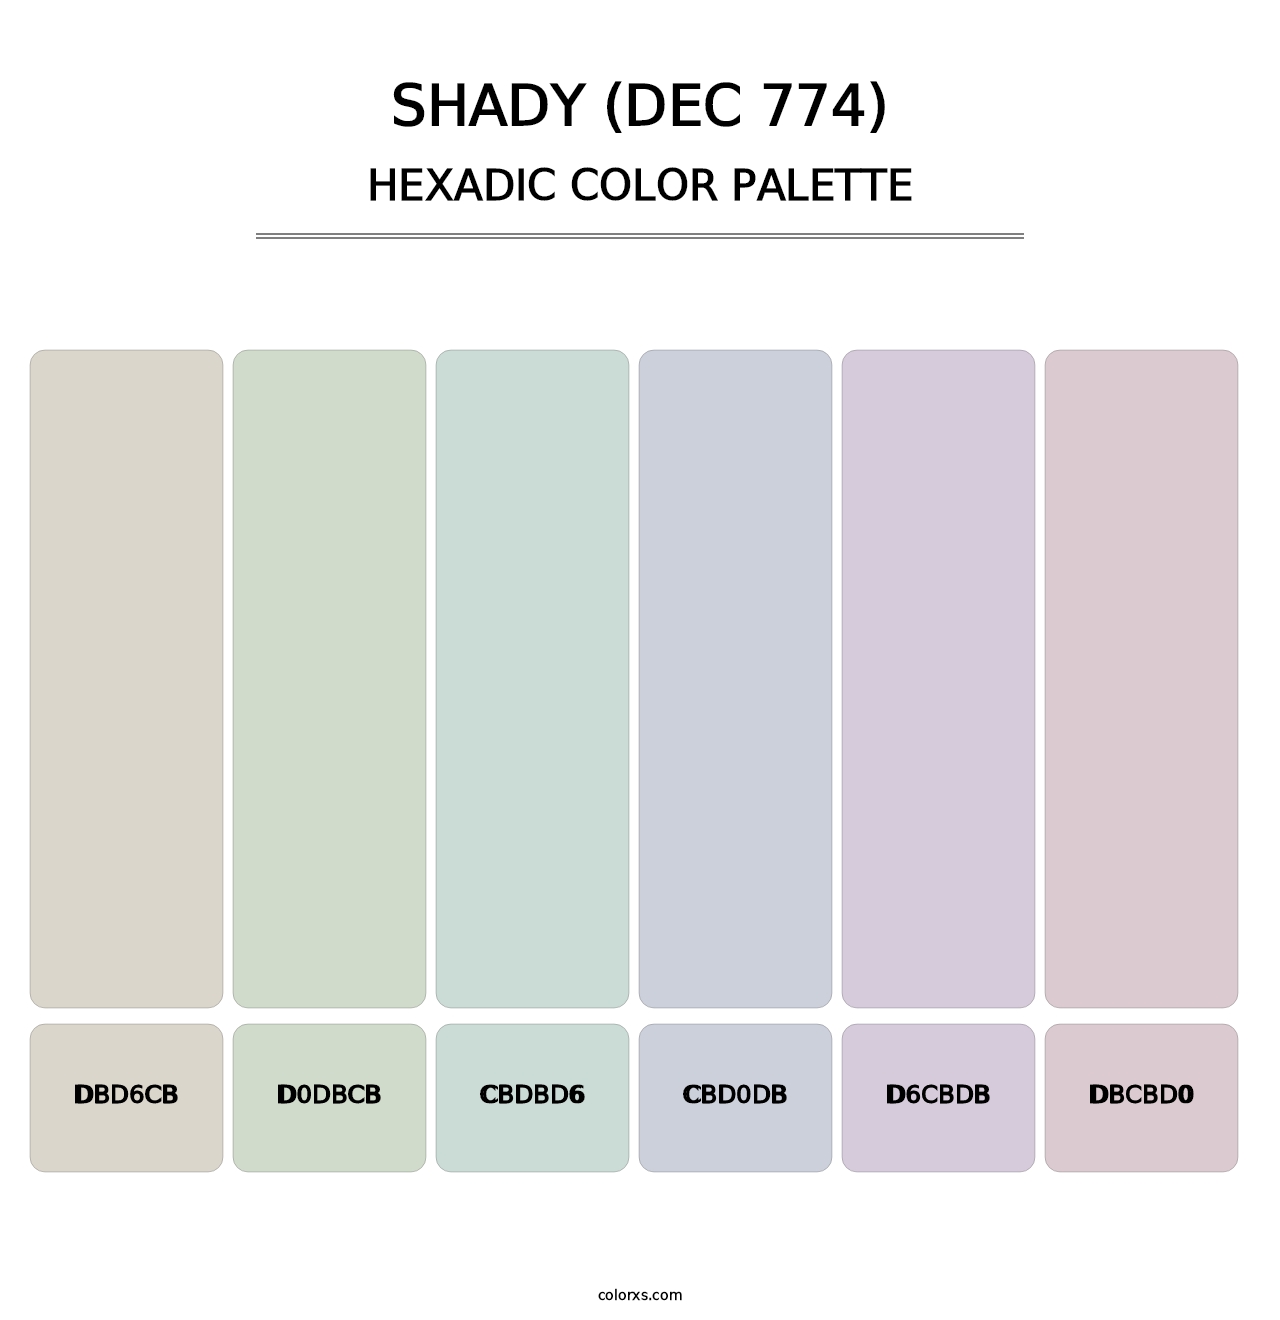 Shady (DEC 774) - Hexadic Color Palette